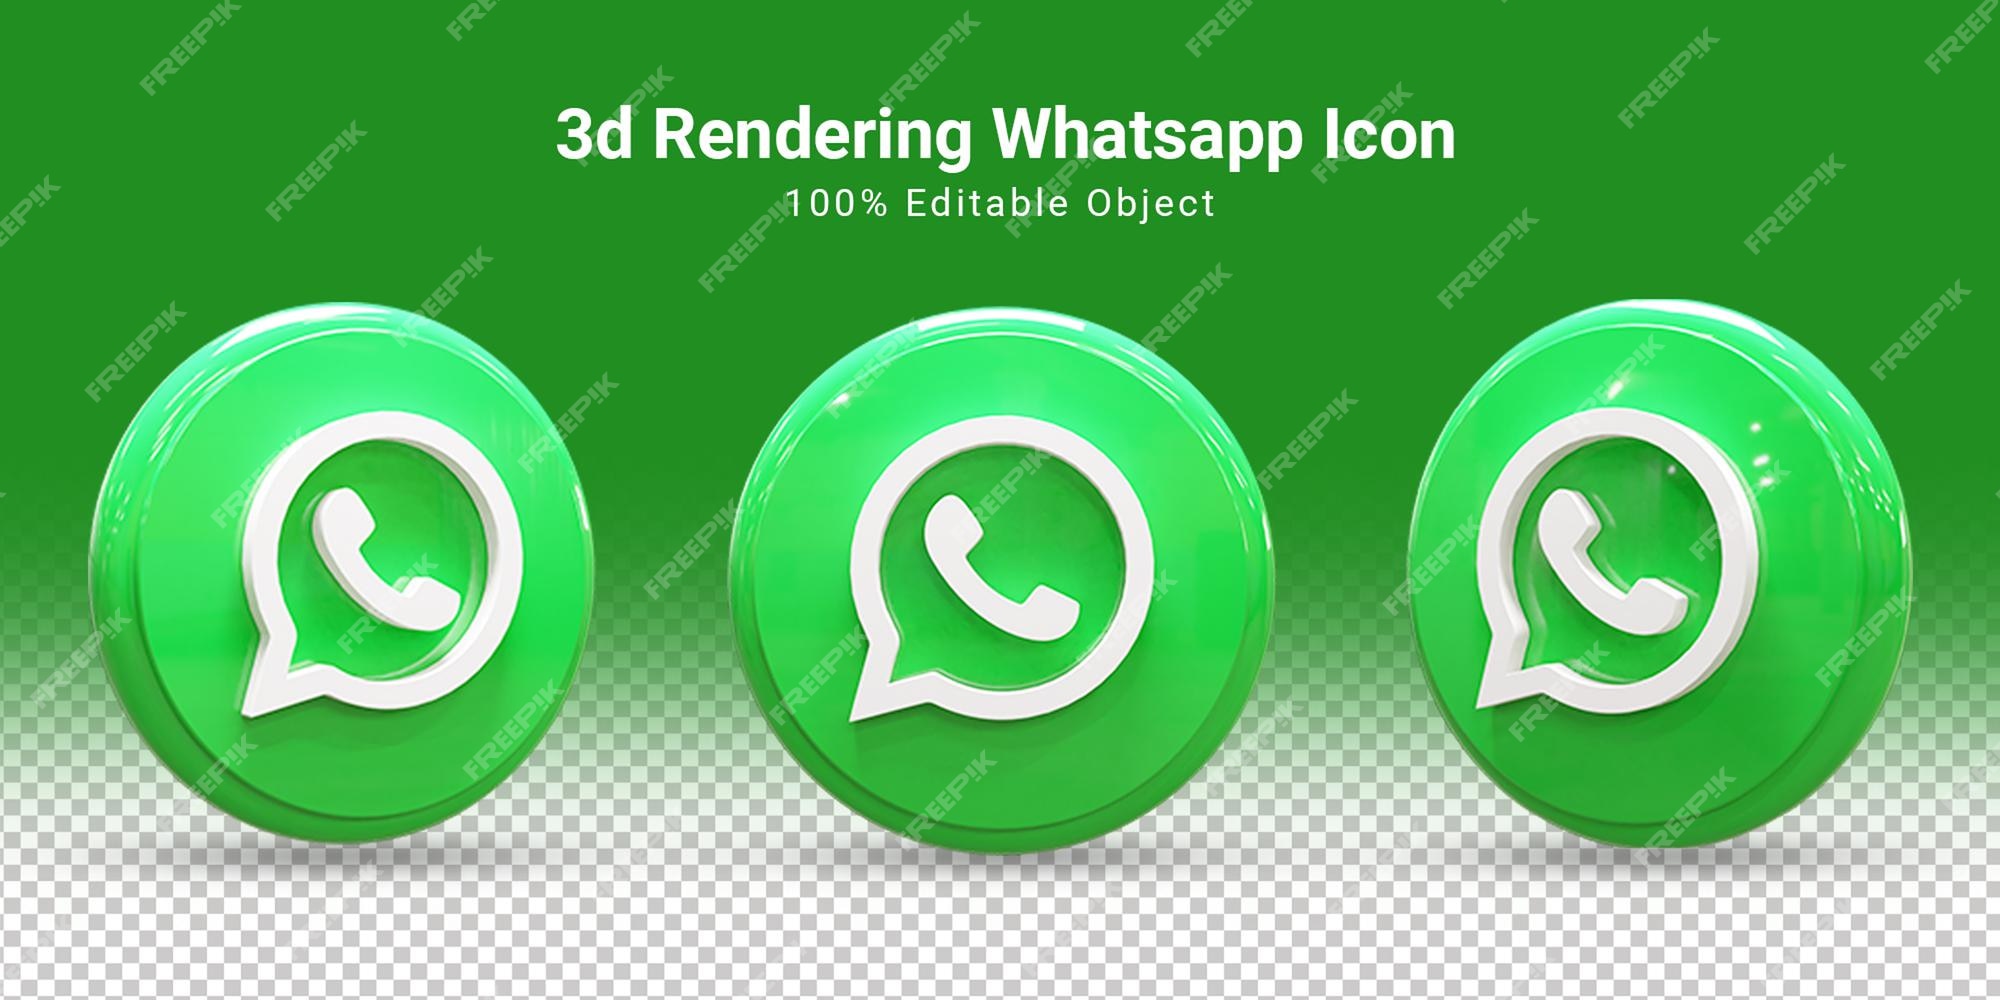 Premium Psd Whatsapp Glossy Social Media Icon Set 3d